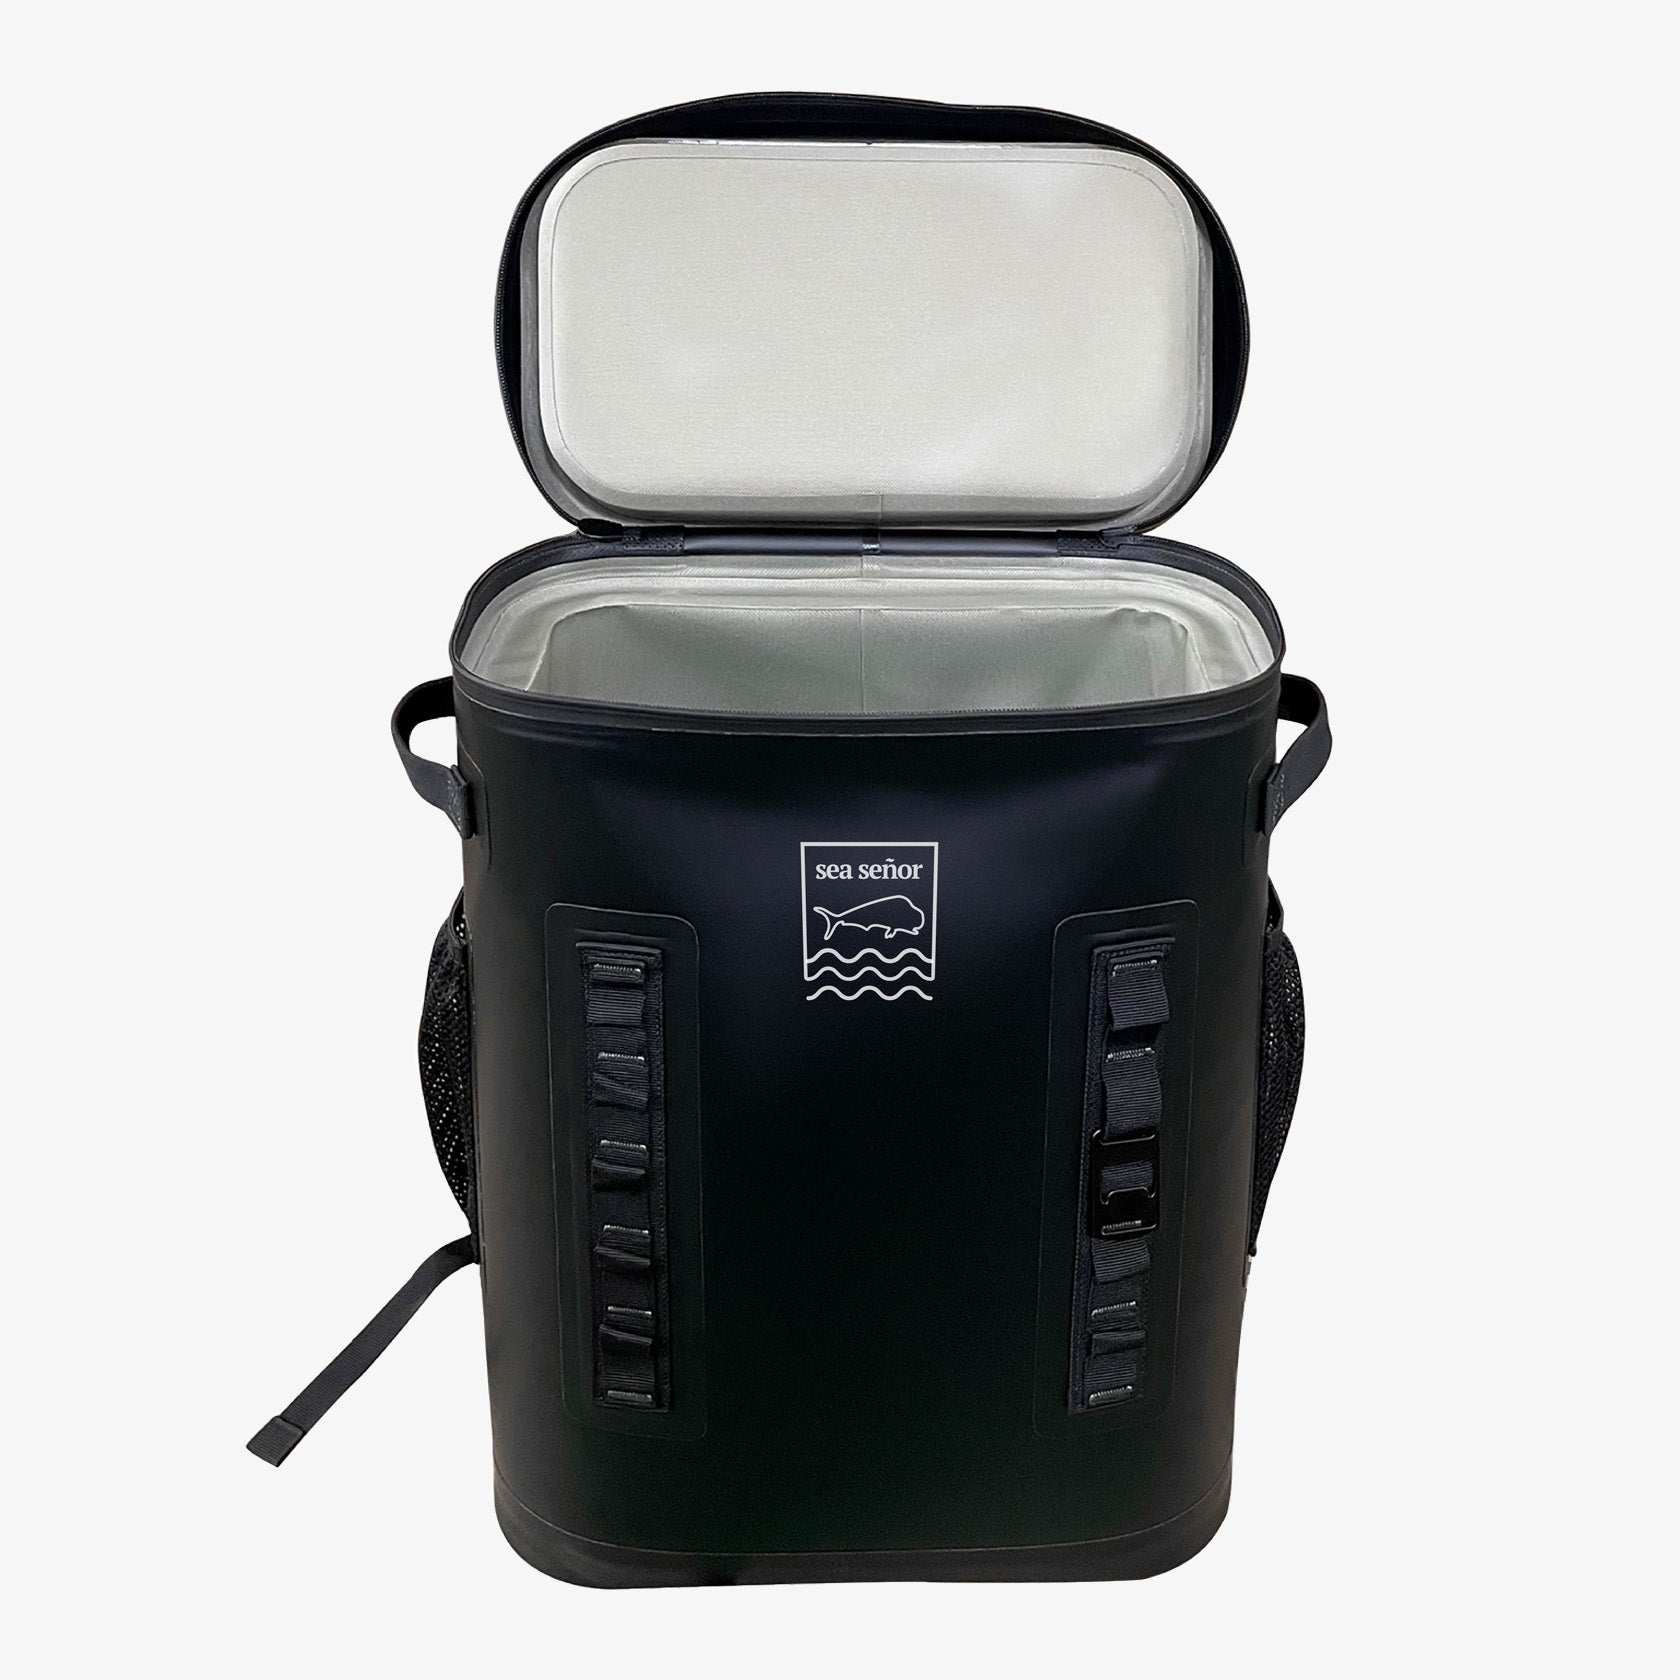 YETI Hopper Backflip 24 Insulated Backpack Cooler at